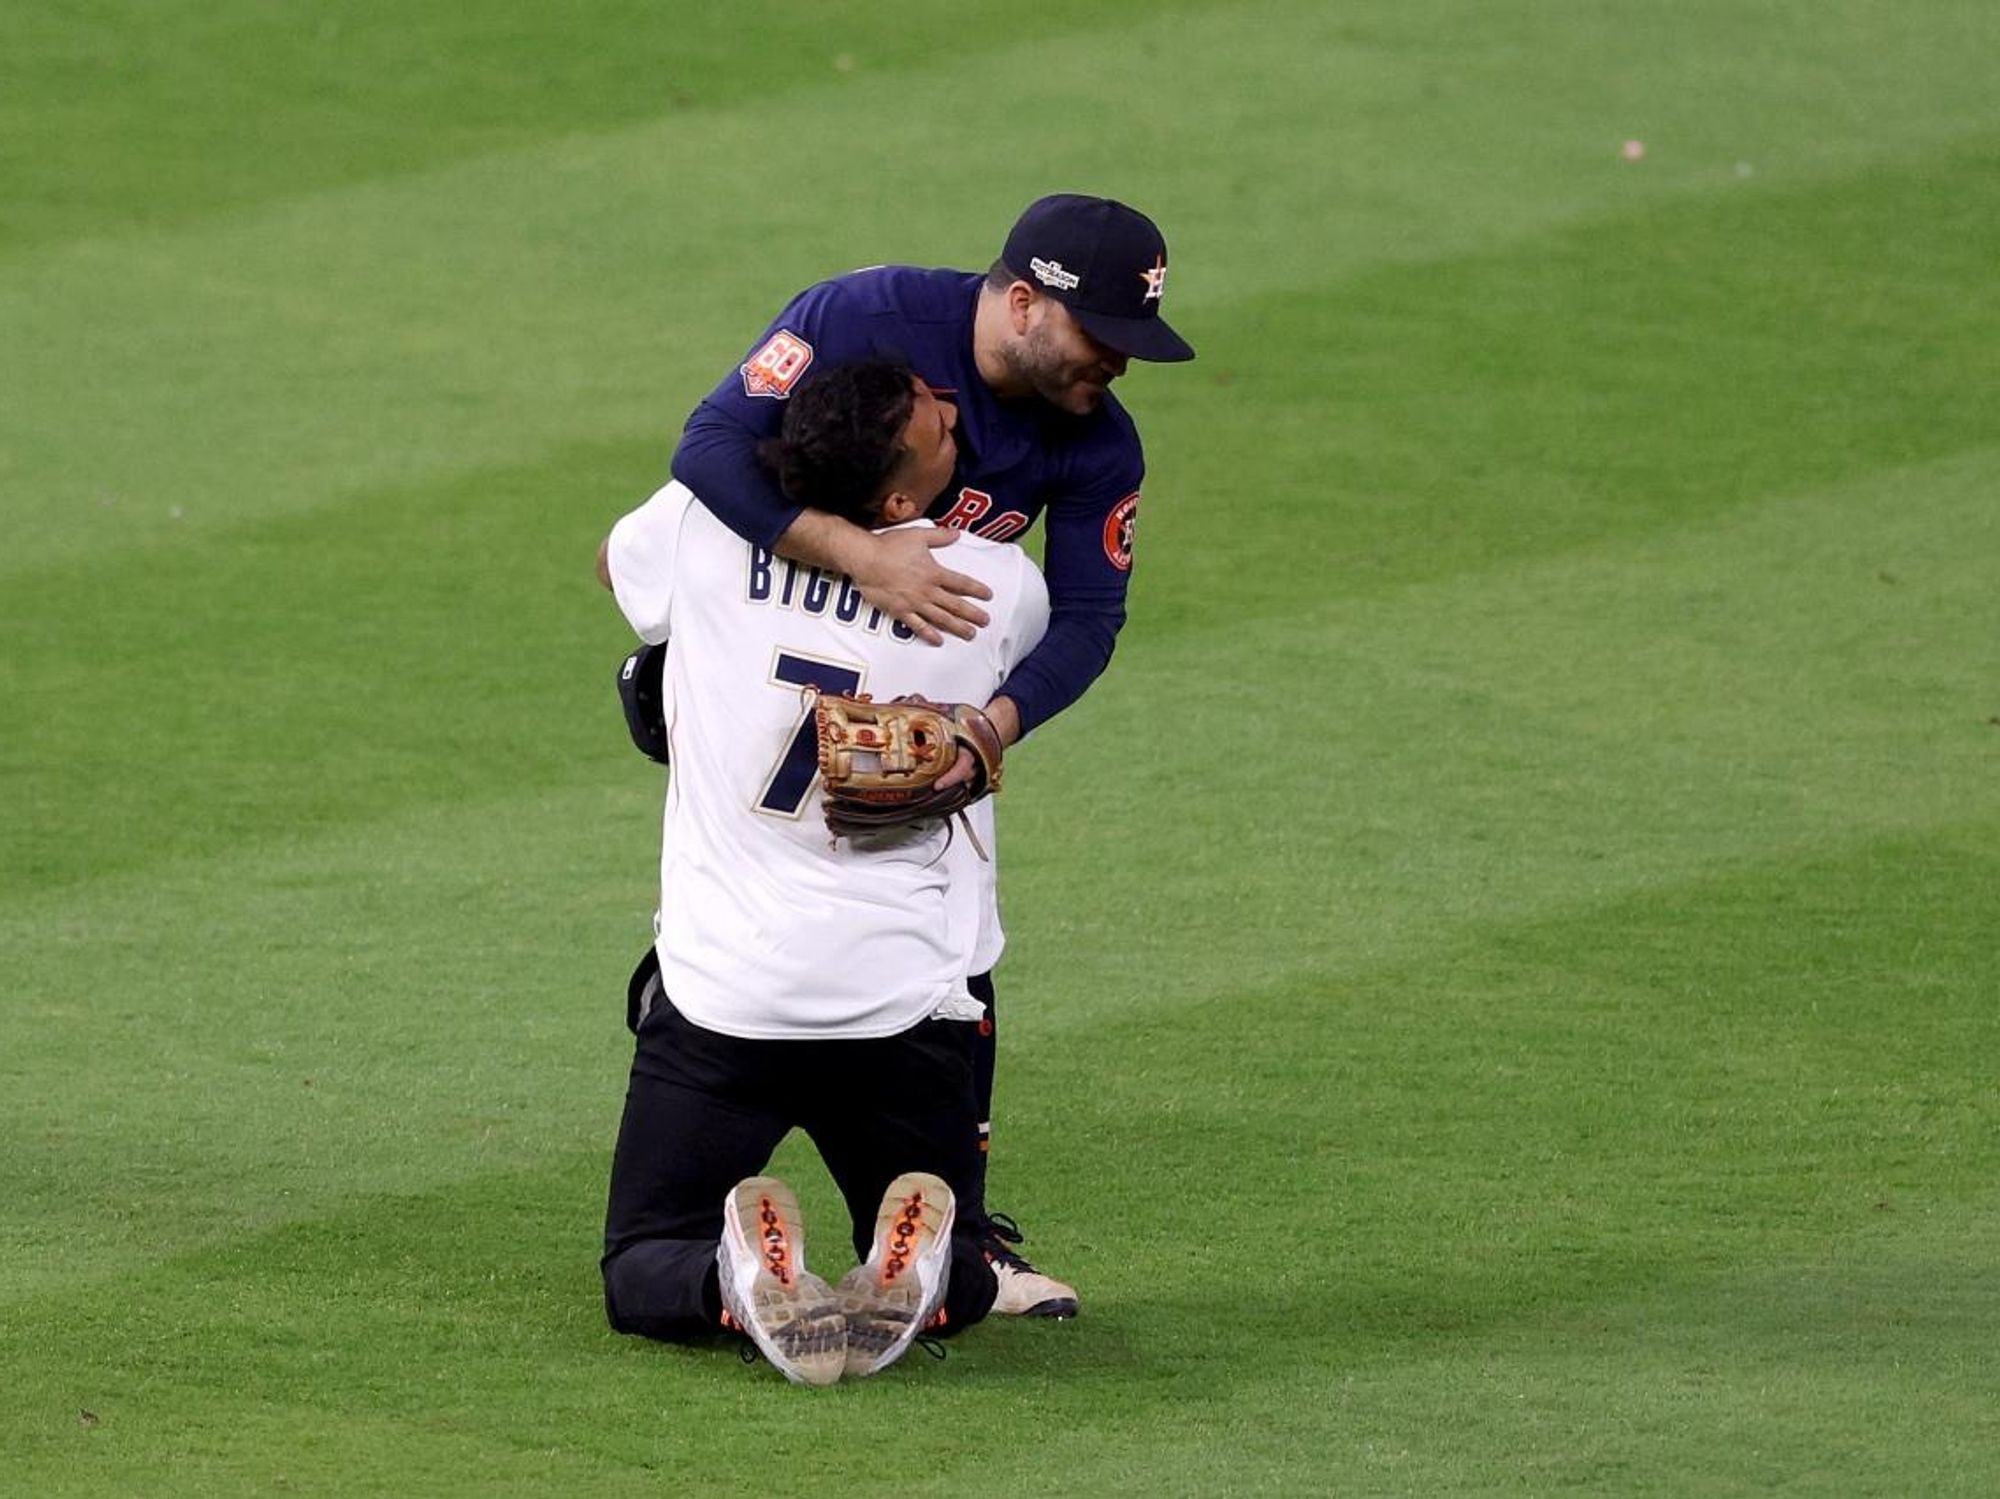 Houston Astros hero José Altuve hilariously hugs it out in viral fan moment  - CultureMap Houston